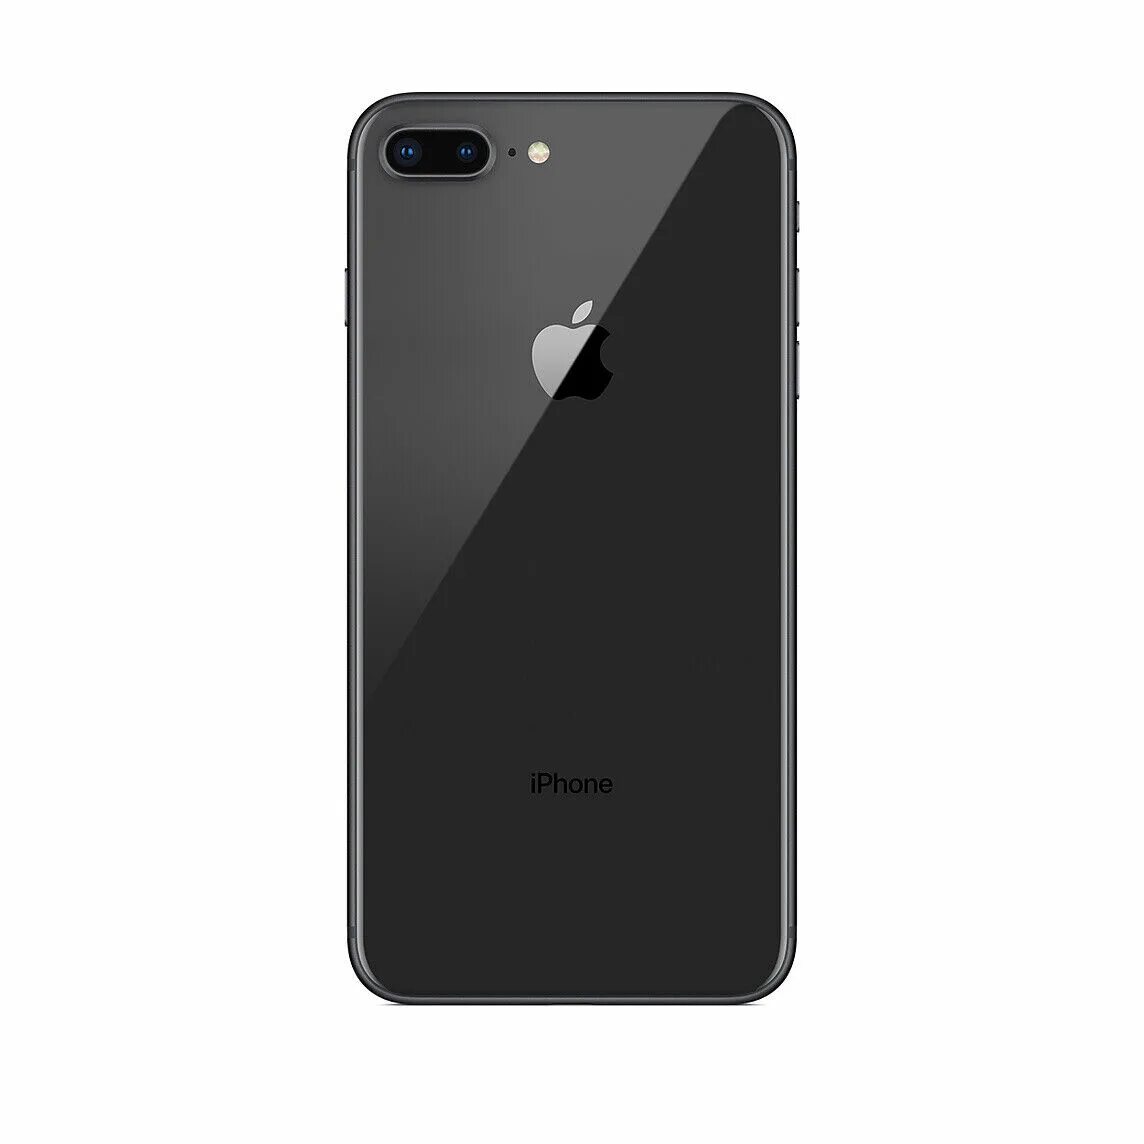 Iphone 8 Plus Space Gray. Iphone 8 Space Gray оригинал корпус. Iphone 8 Plus Black. Apple iphone x 64gb Space Gray. Мобильные телефоны 8 256gb